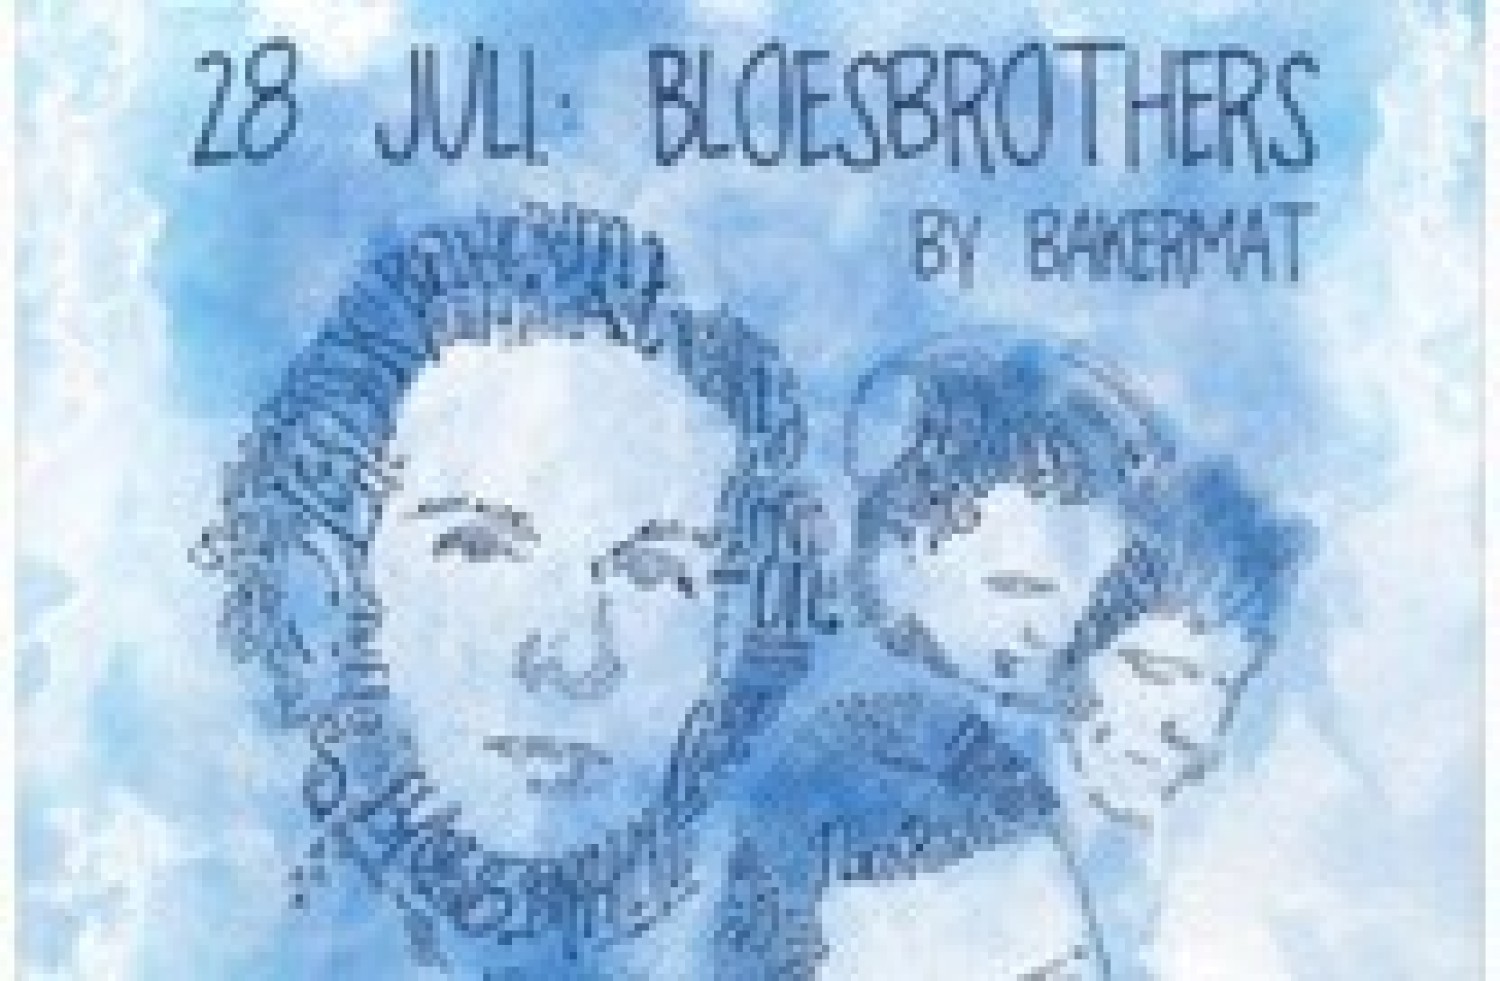 Party report: Bloes Brothers by Bakermat, Bloomingdale, 28 juli 2013